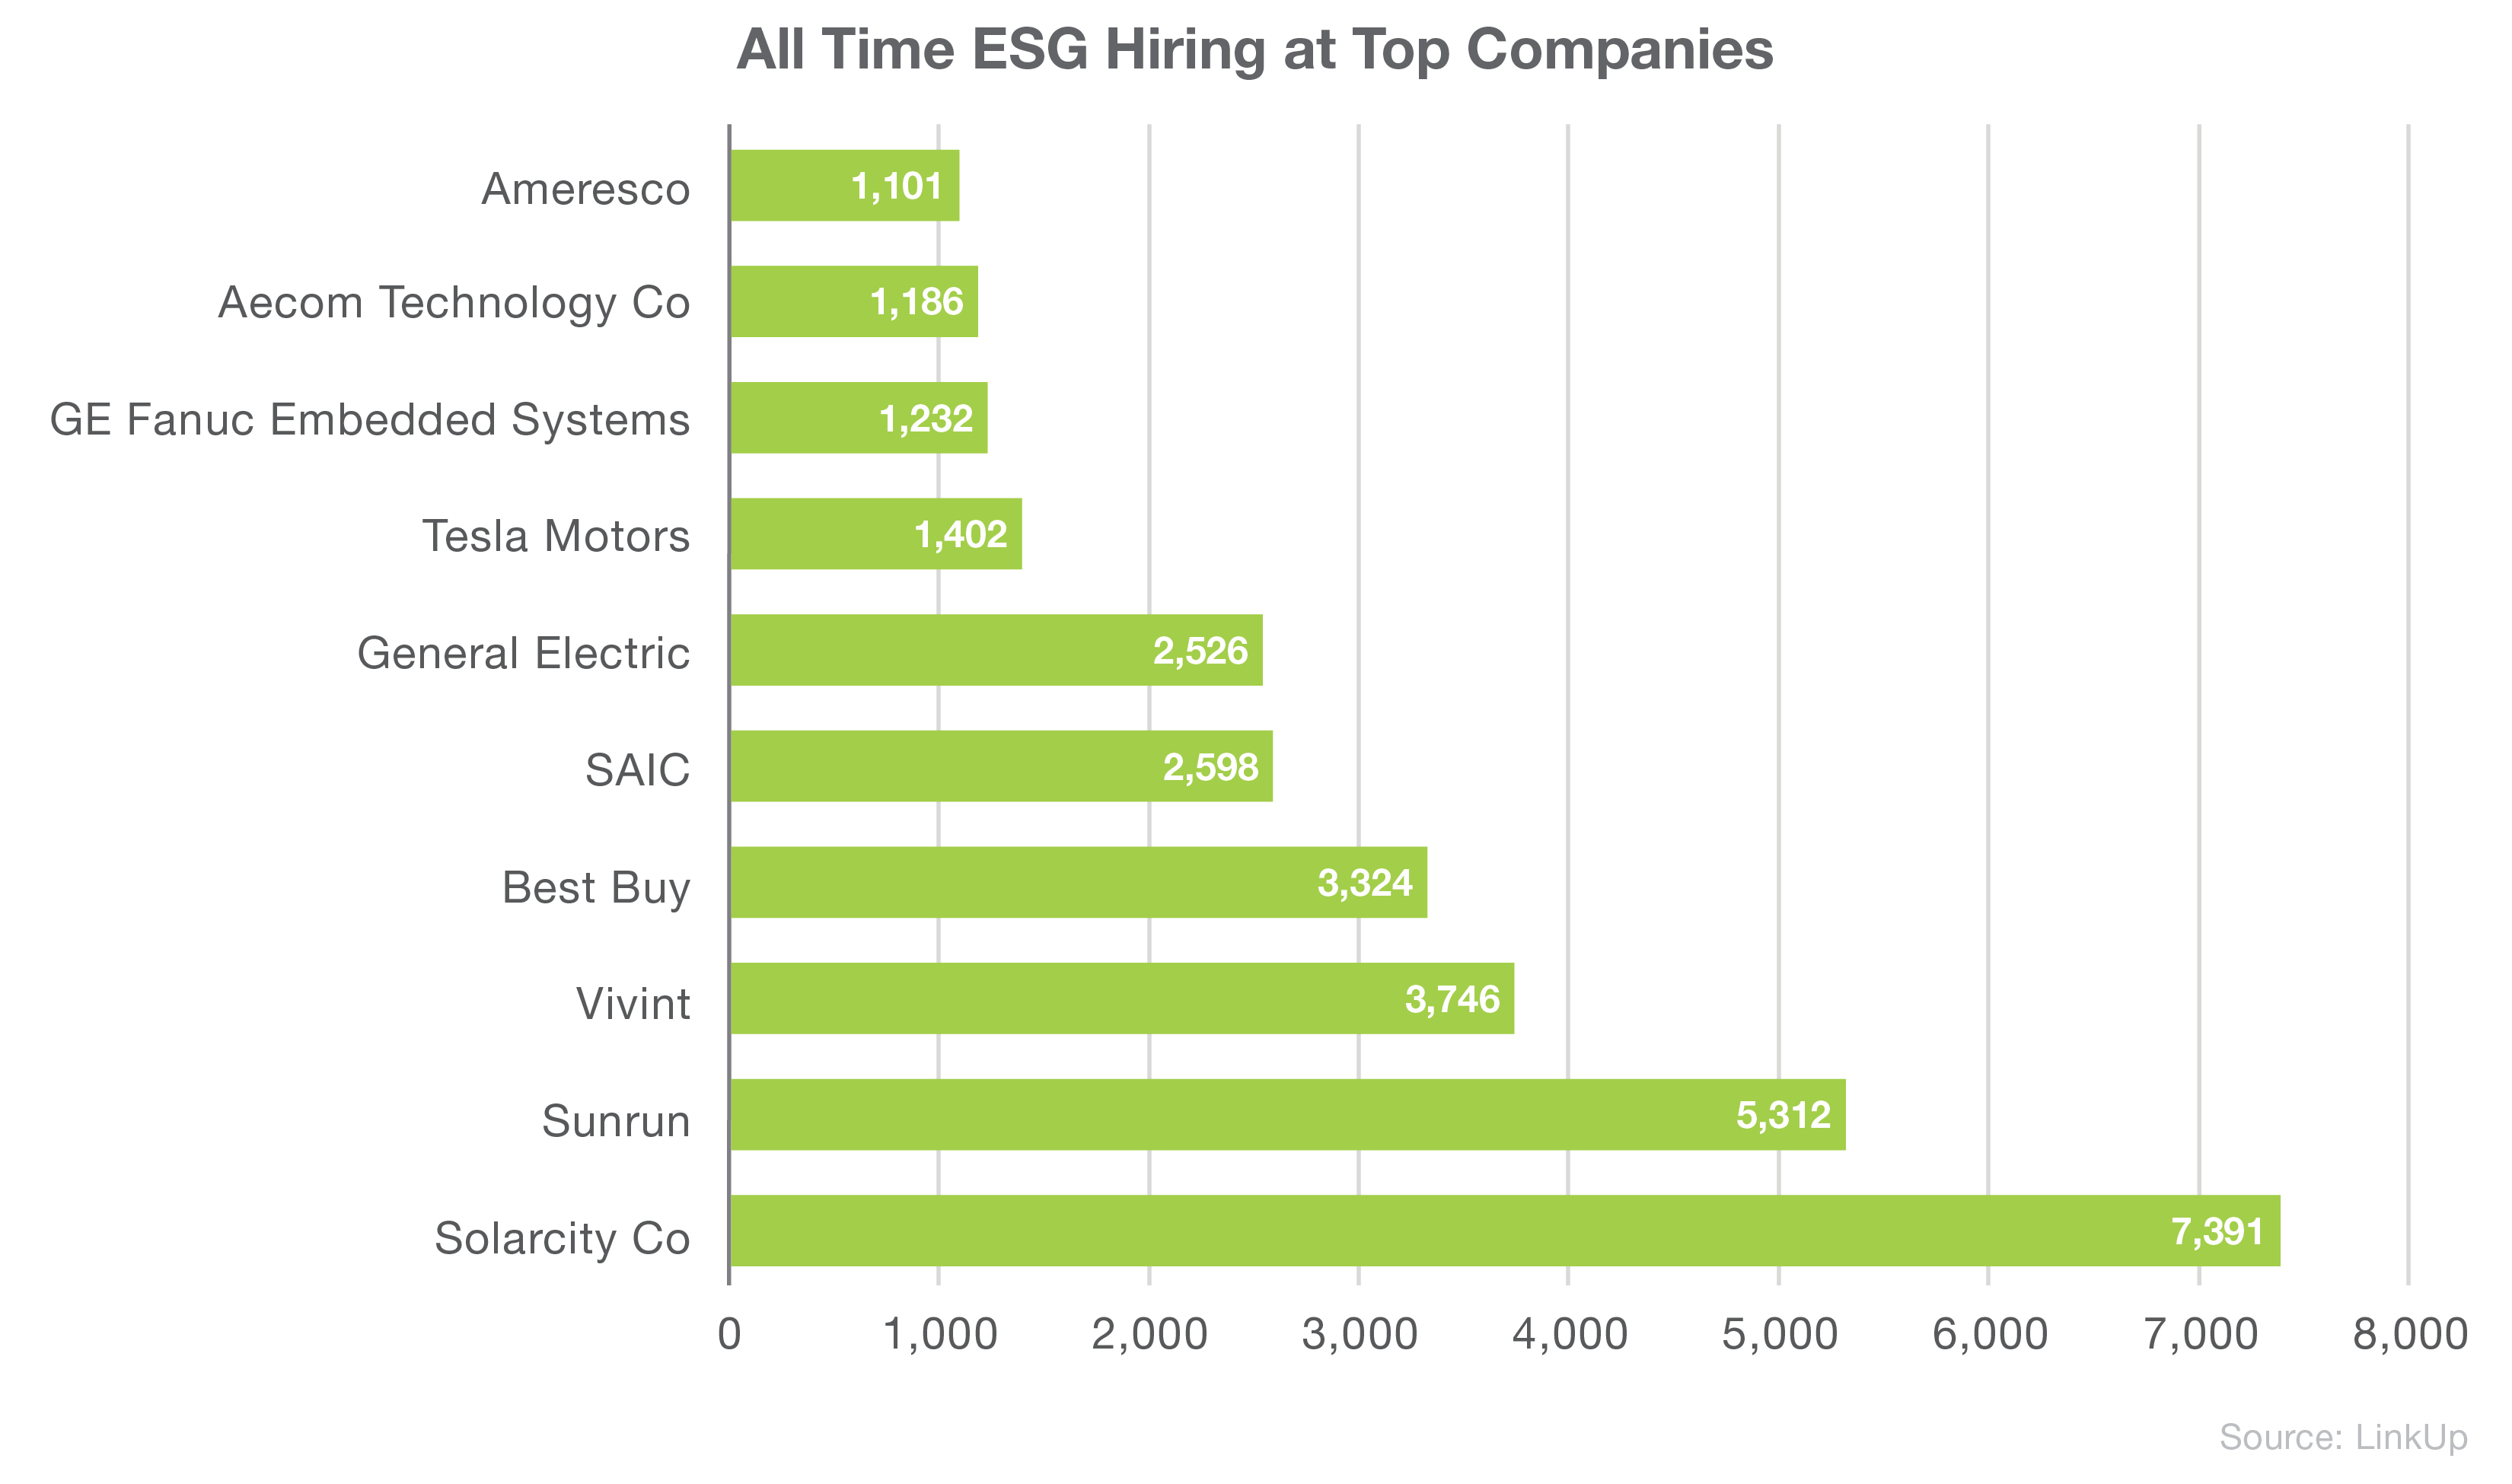 ESG Hiring at Top Companies